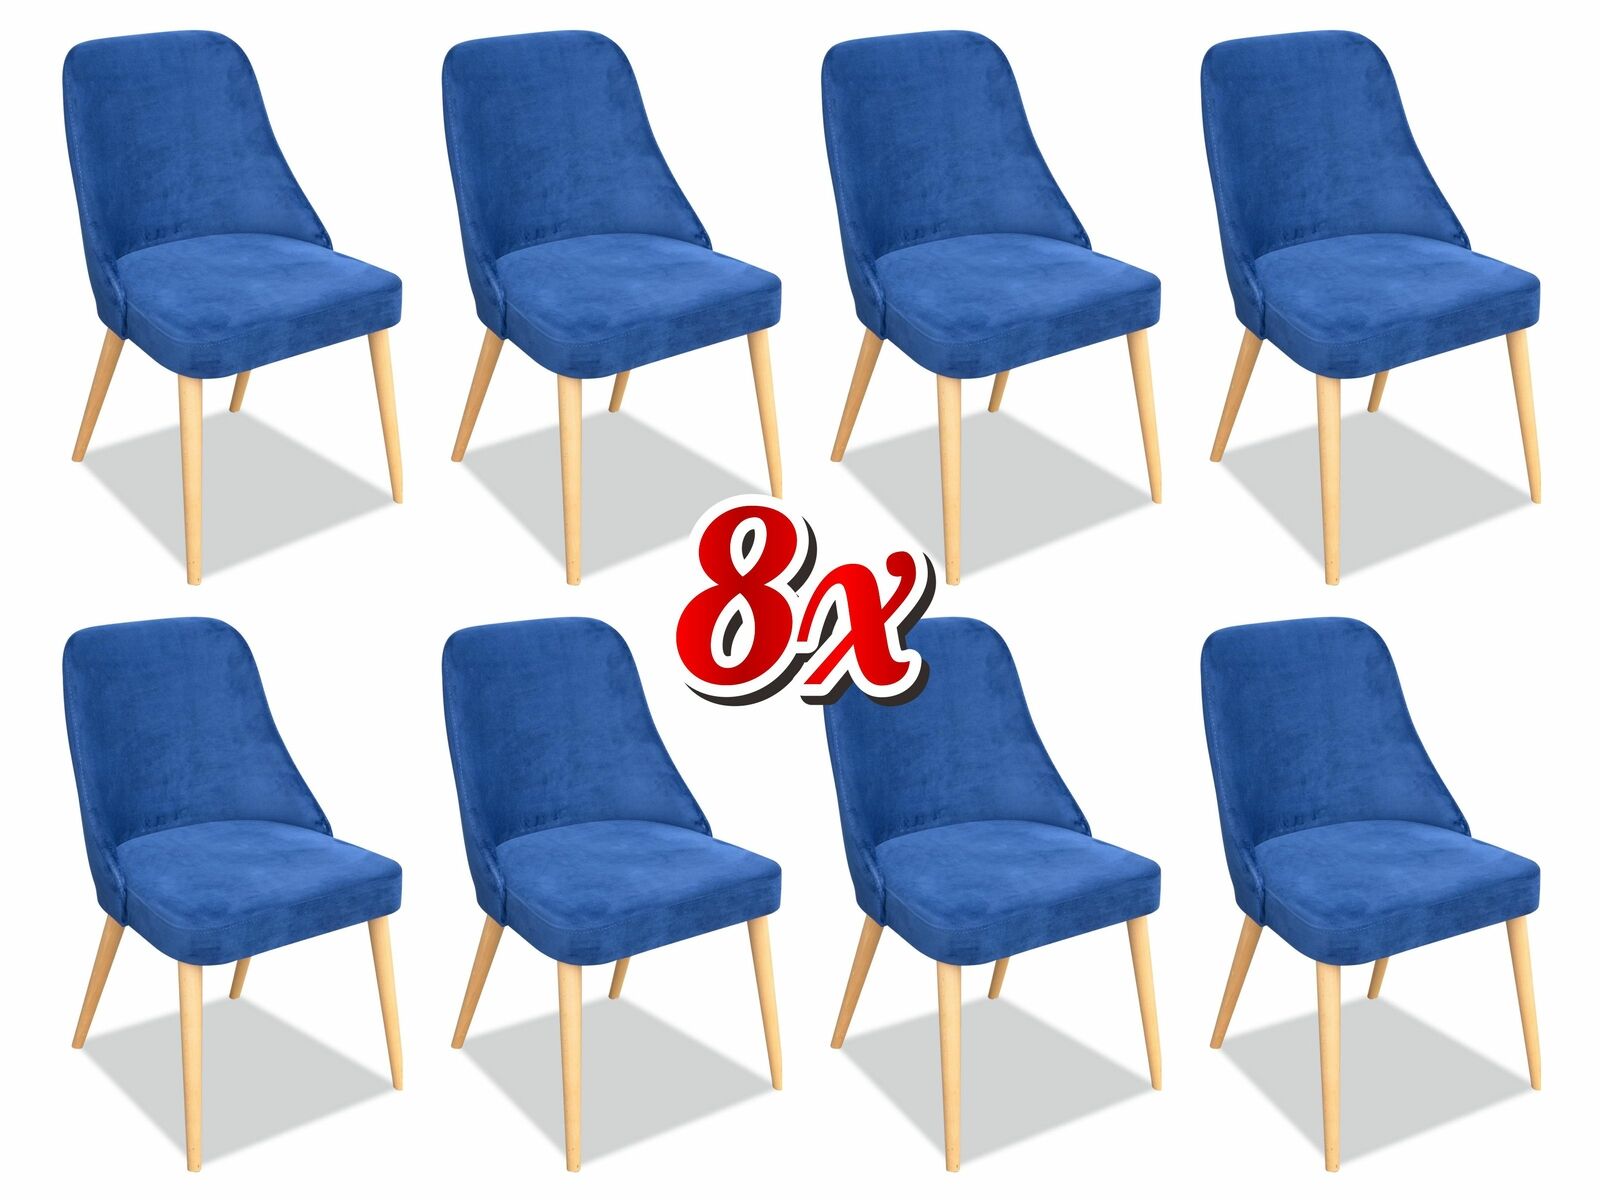 Esszimmer Stuhl Set Stühle 8x Garnitur Gruppen Neu Komplette Sitzgruppe Design